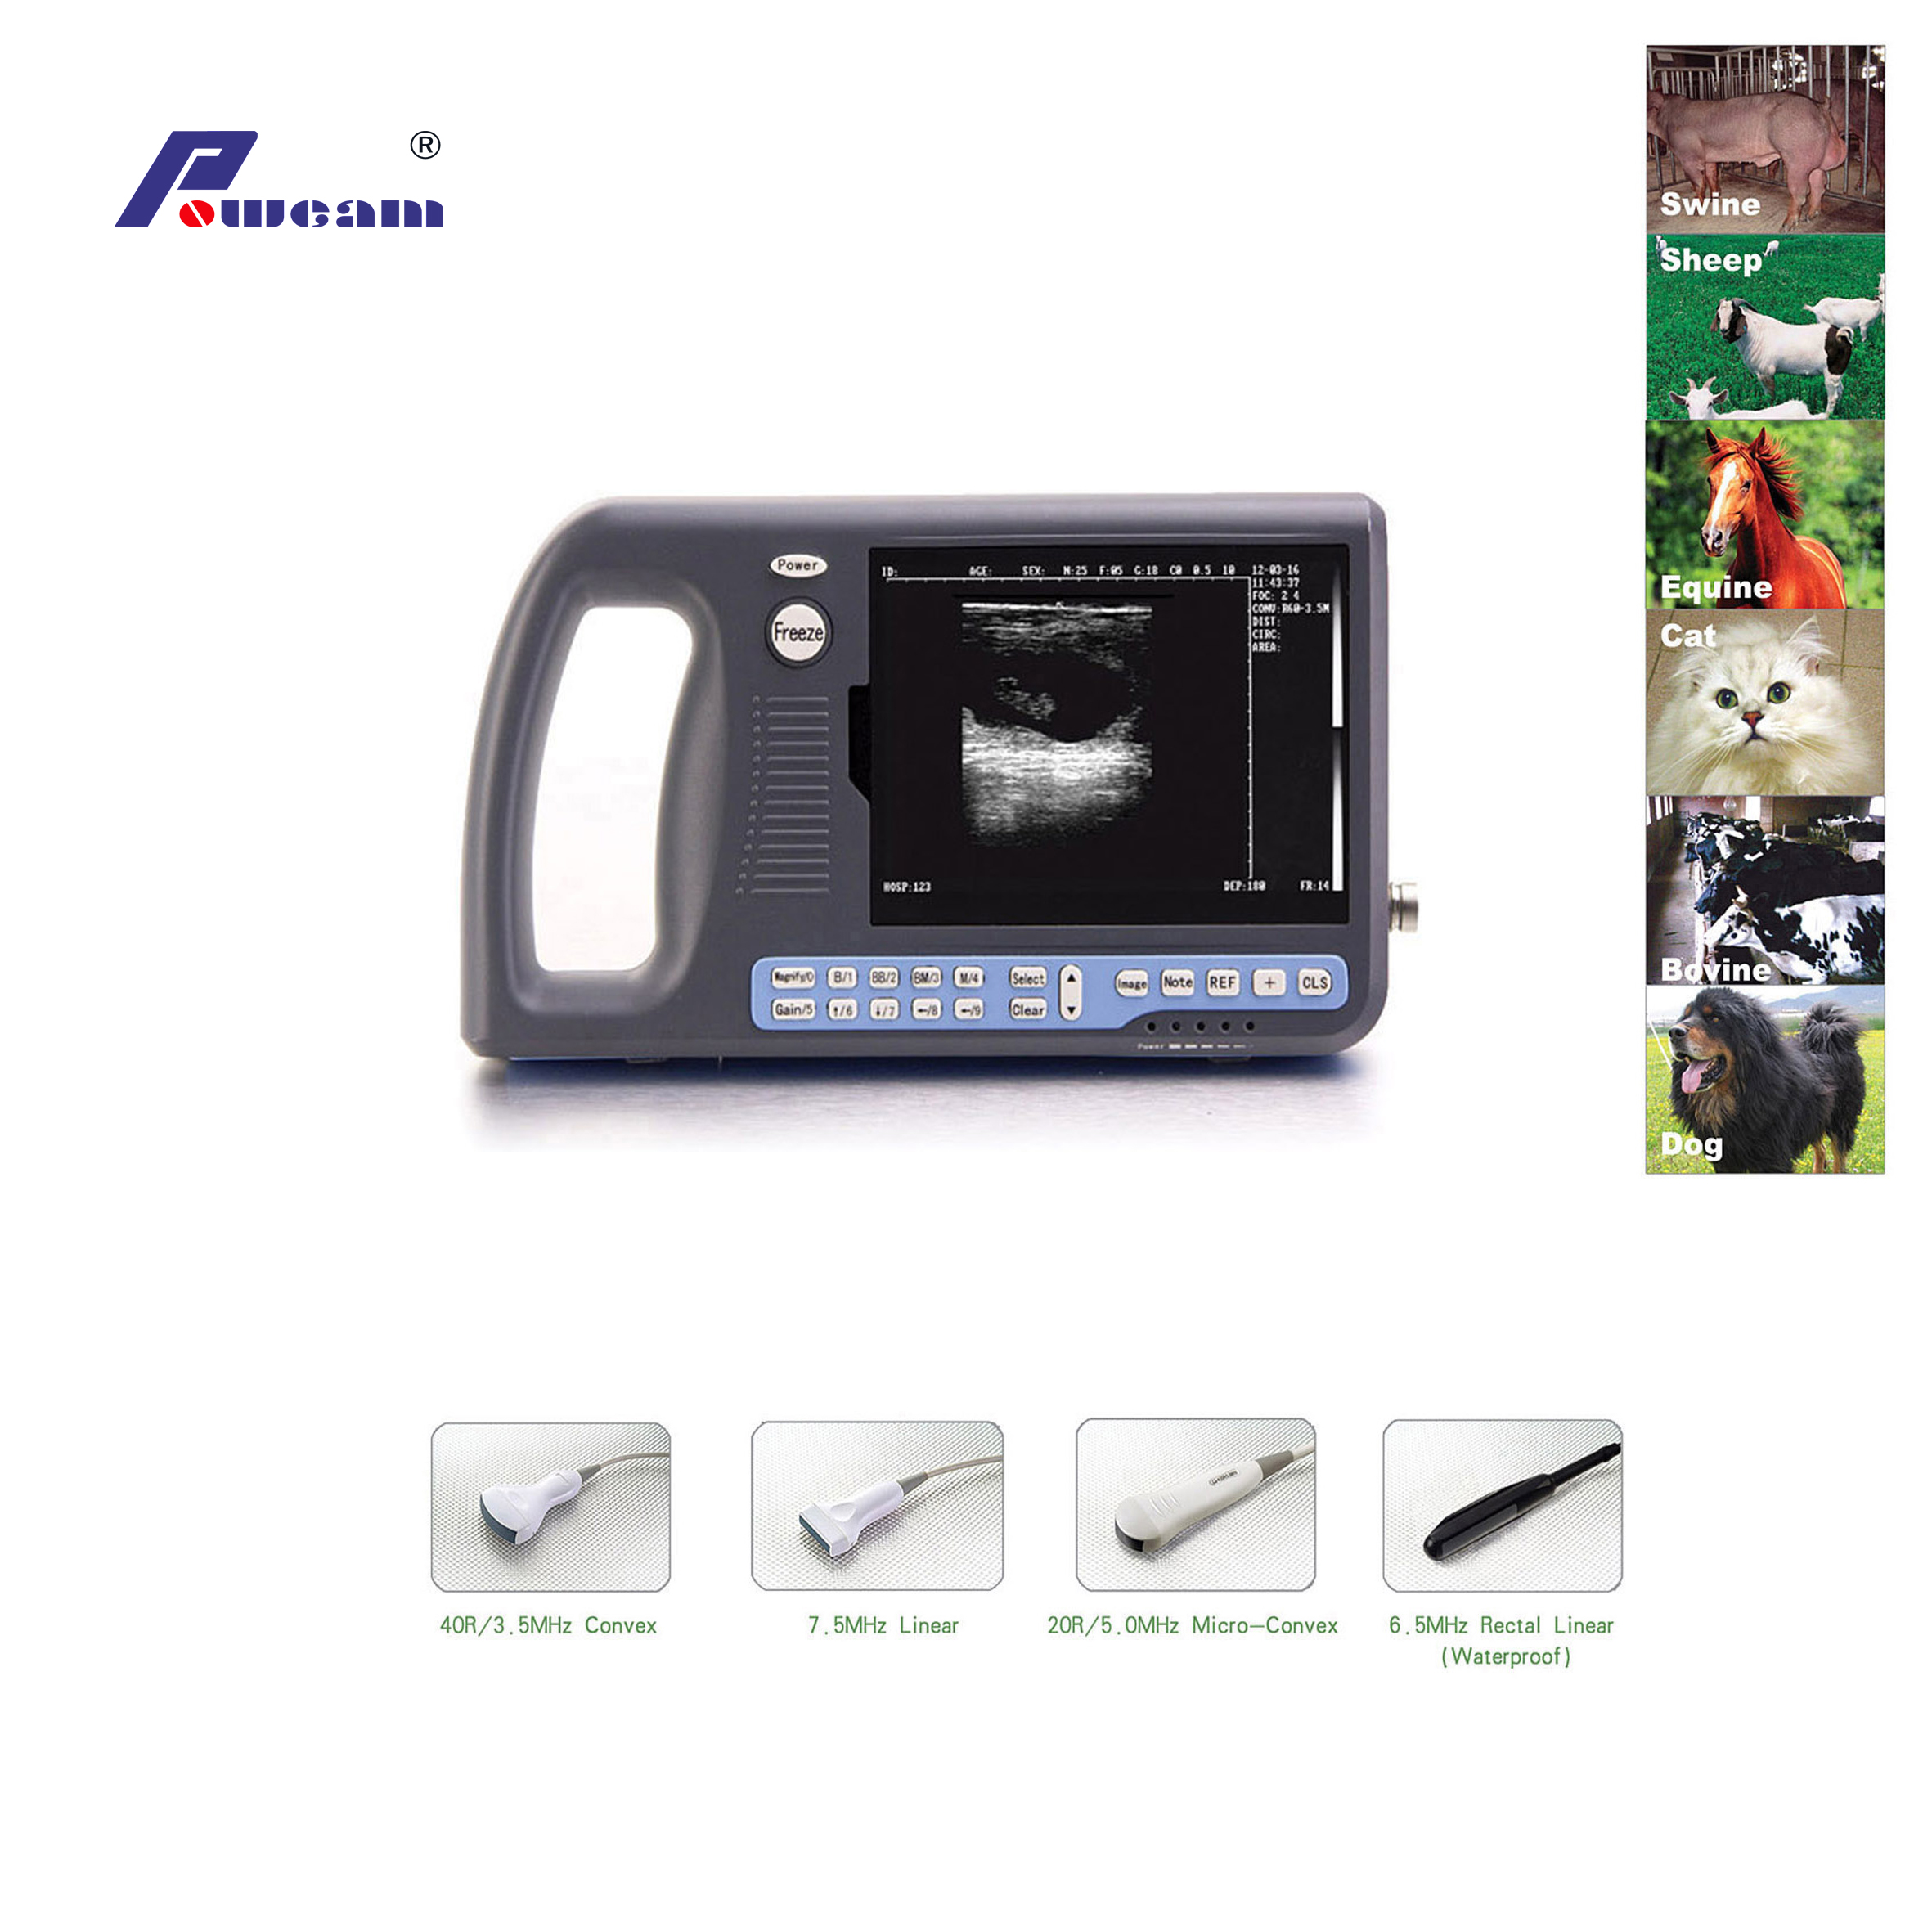 Digital-Palmtop-Ultraschallscanner (wwwb3000)